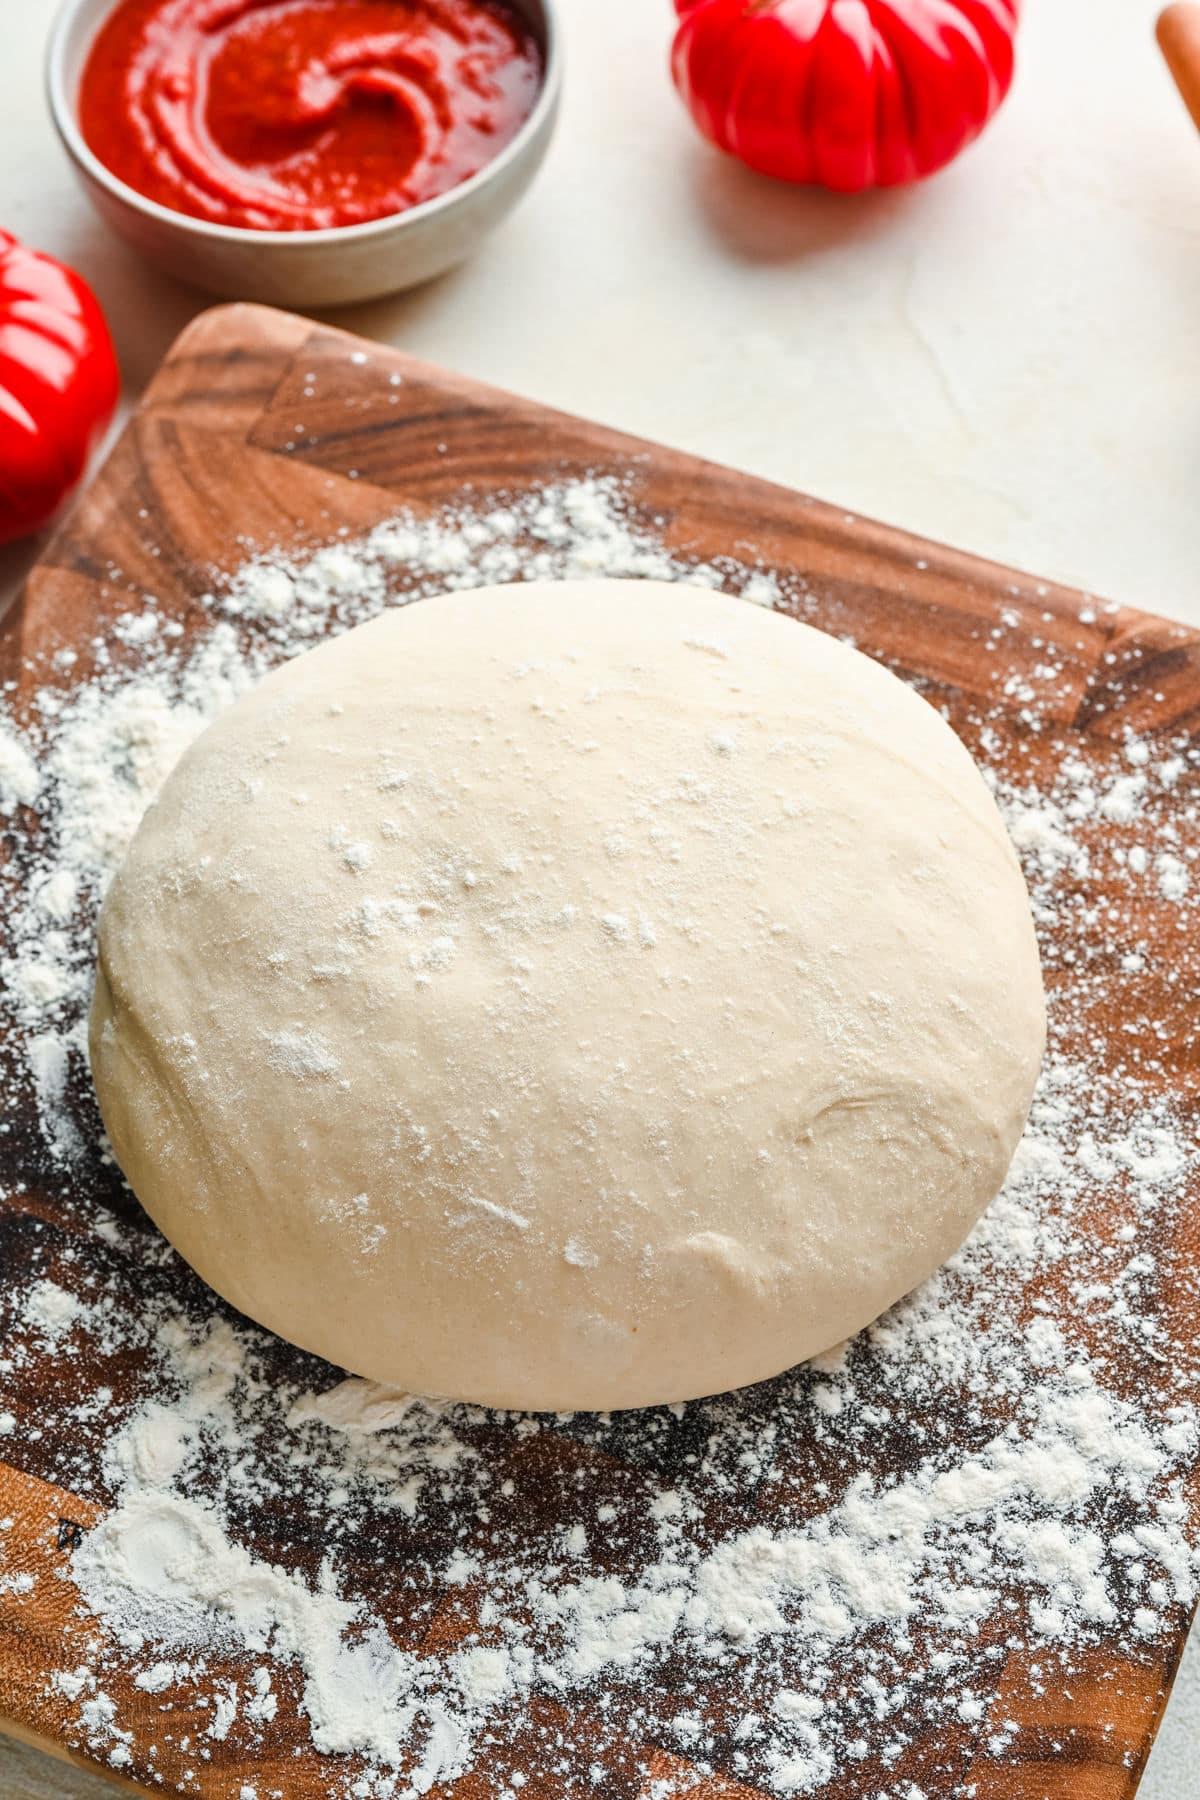 A ball of homemade pizza dough on a floured wooden cutting board.